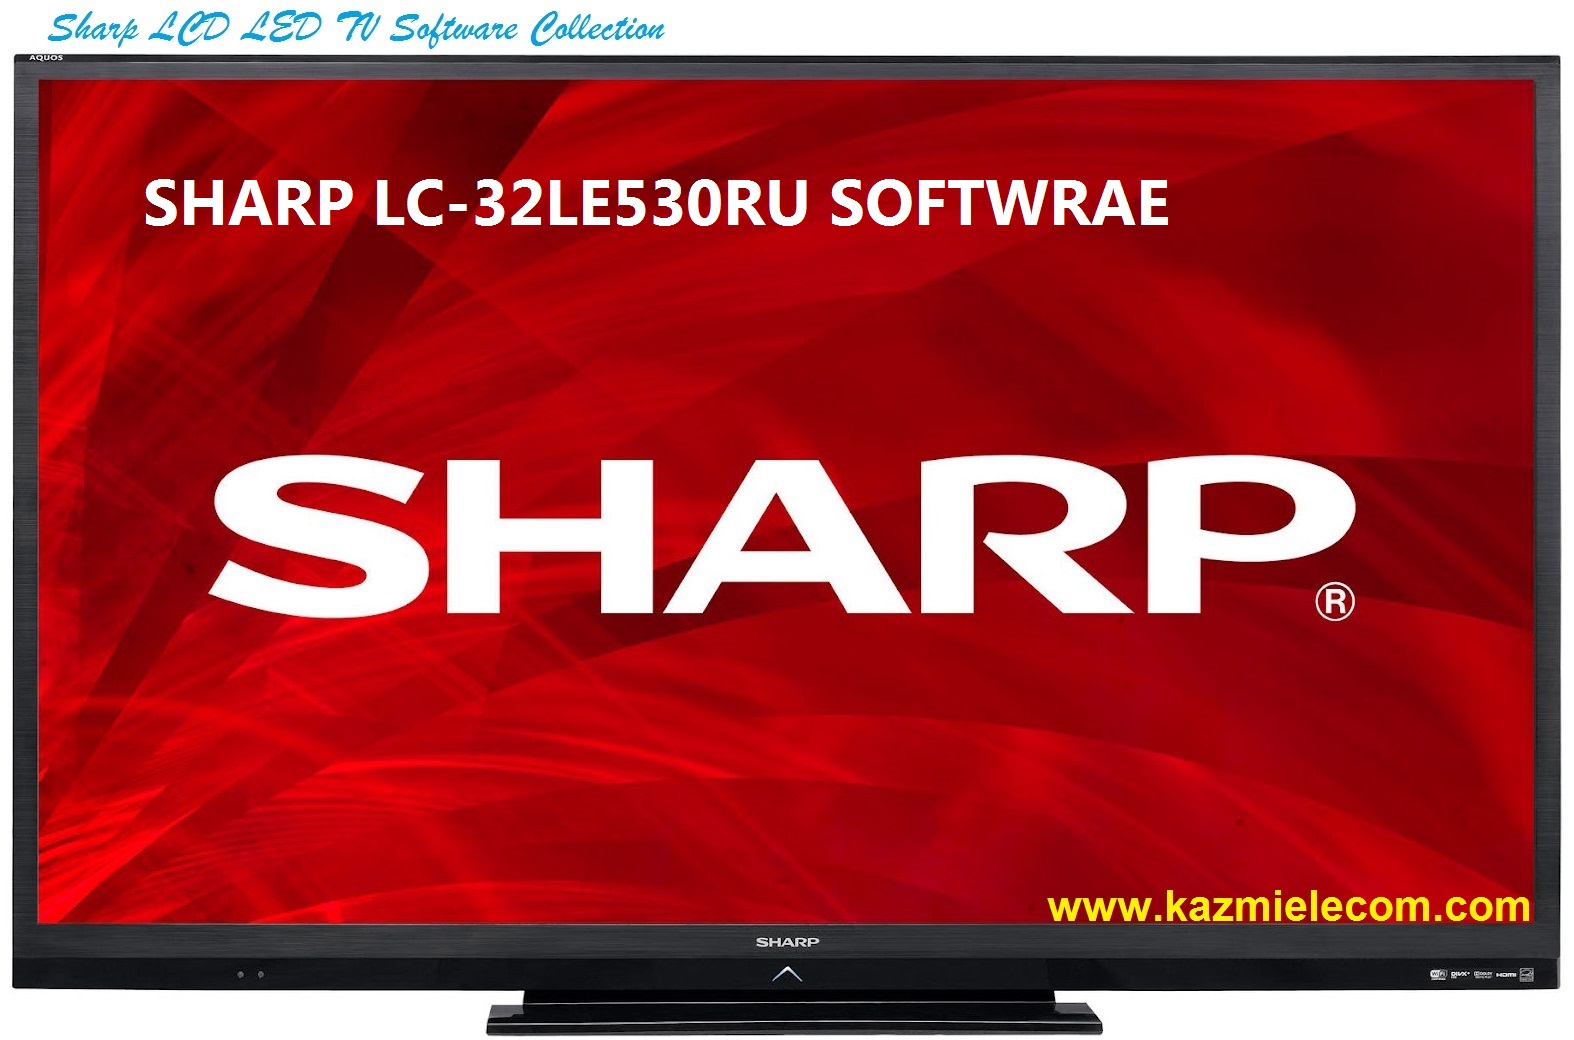 Sharp Lc-32Le530Ru